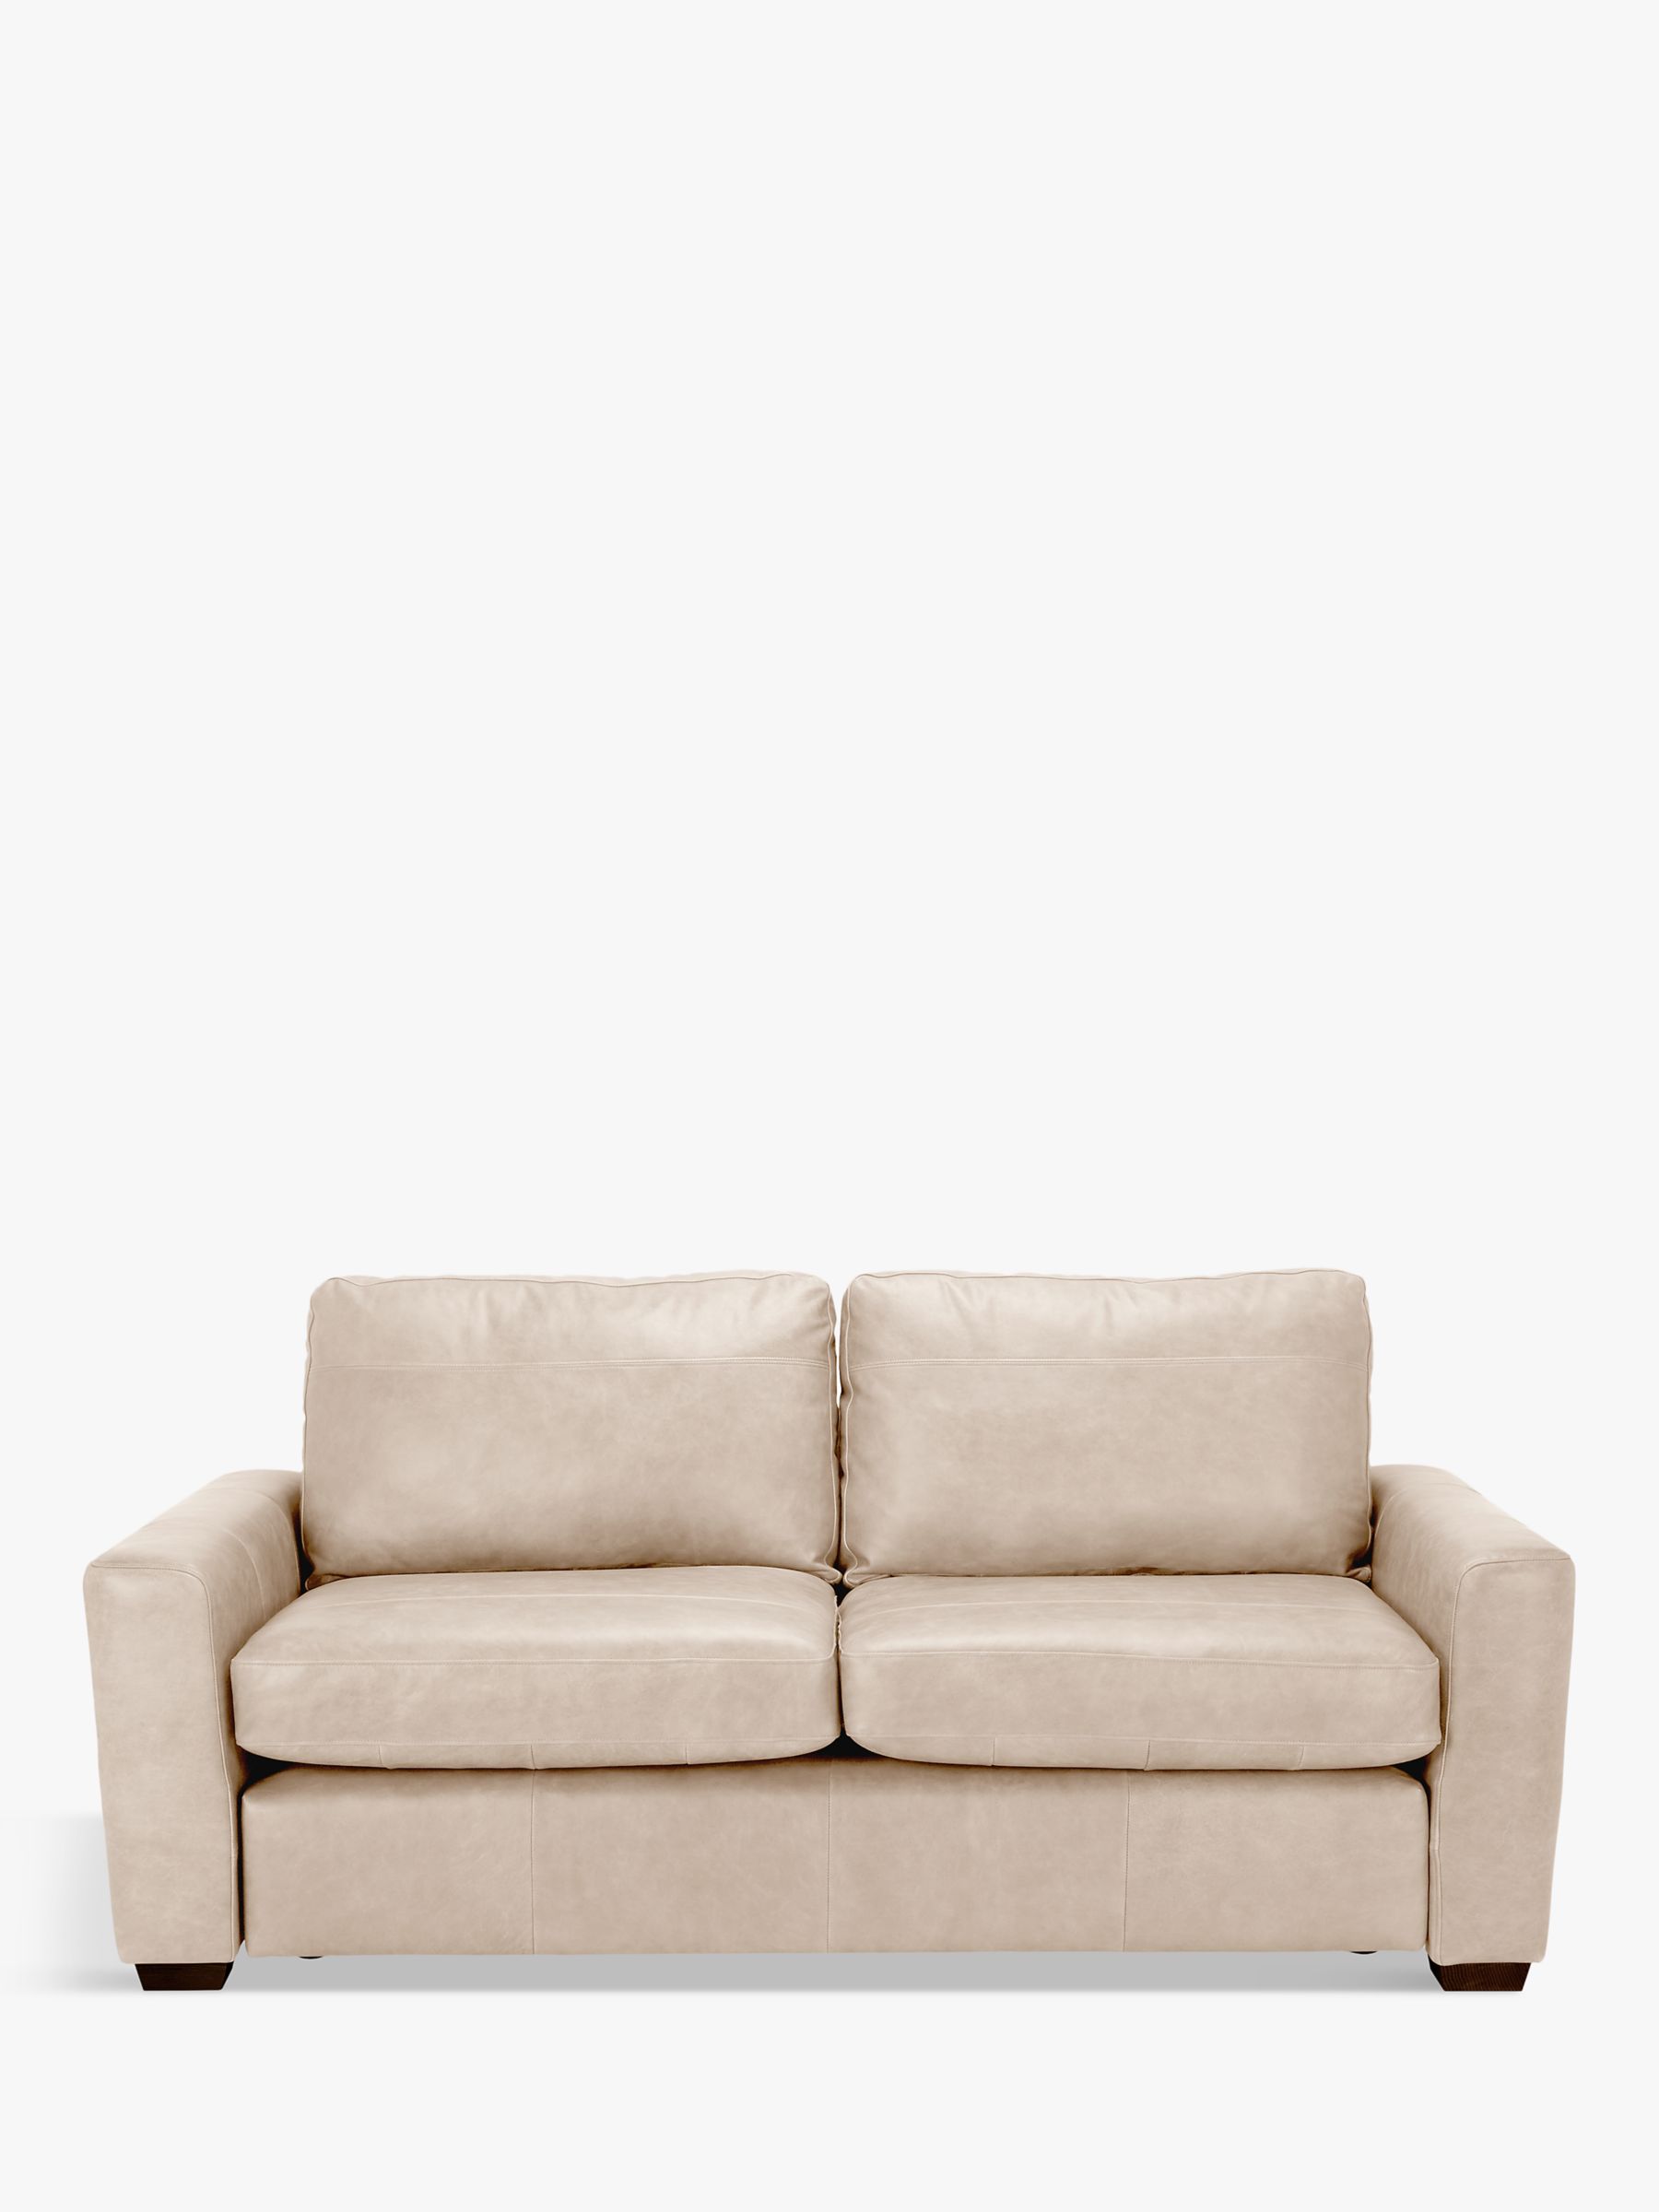 John Lewis Oliver Large 3 Seater Leather Sofa, Dark Leg